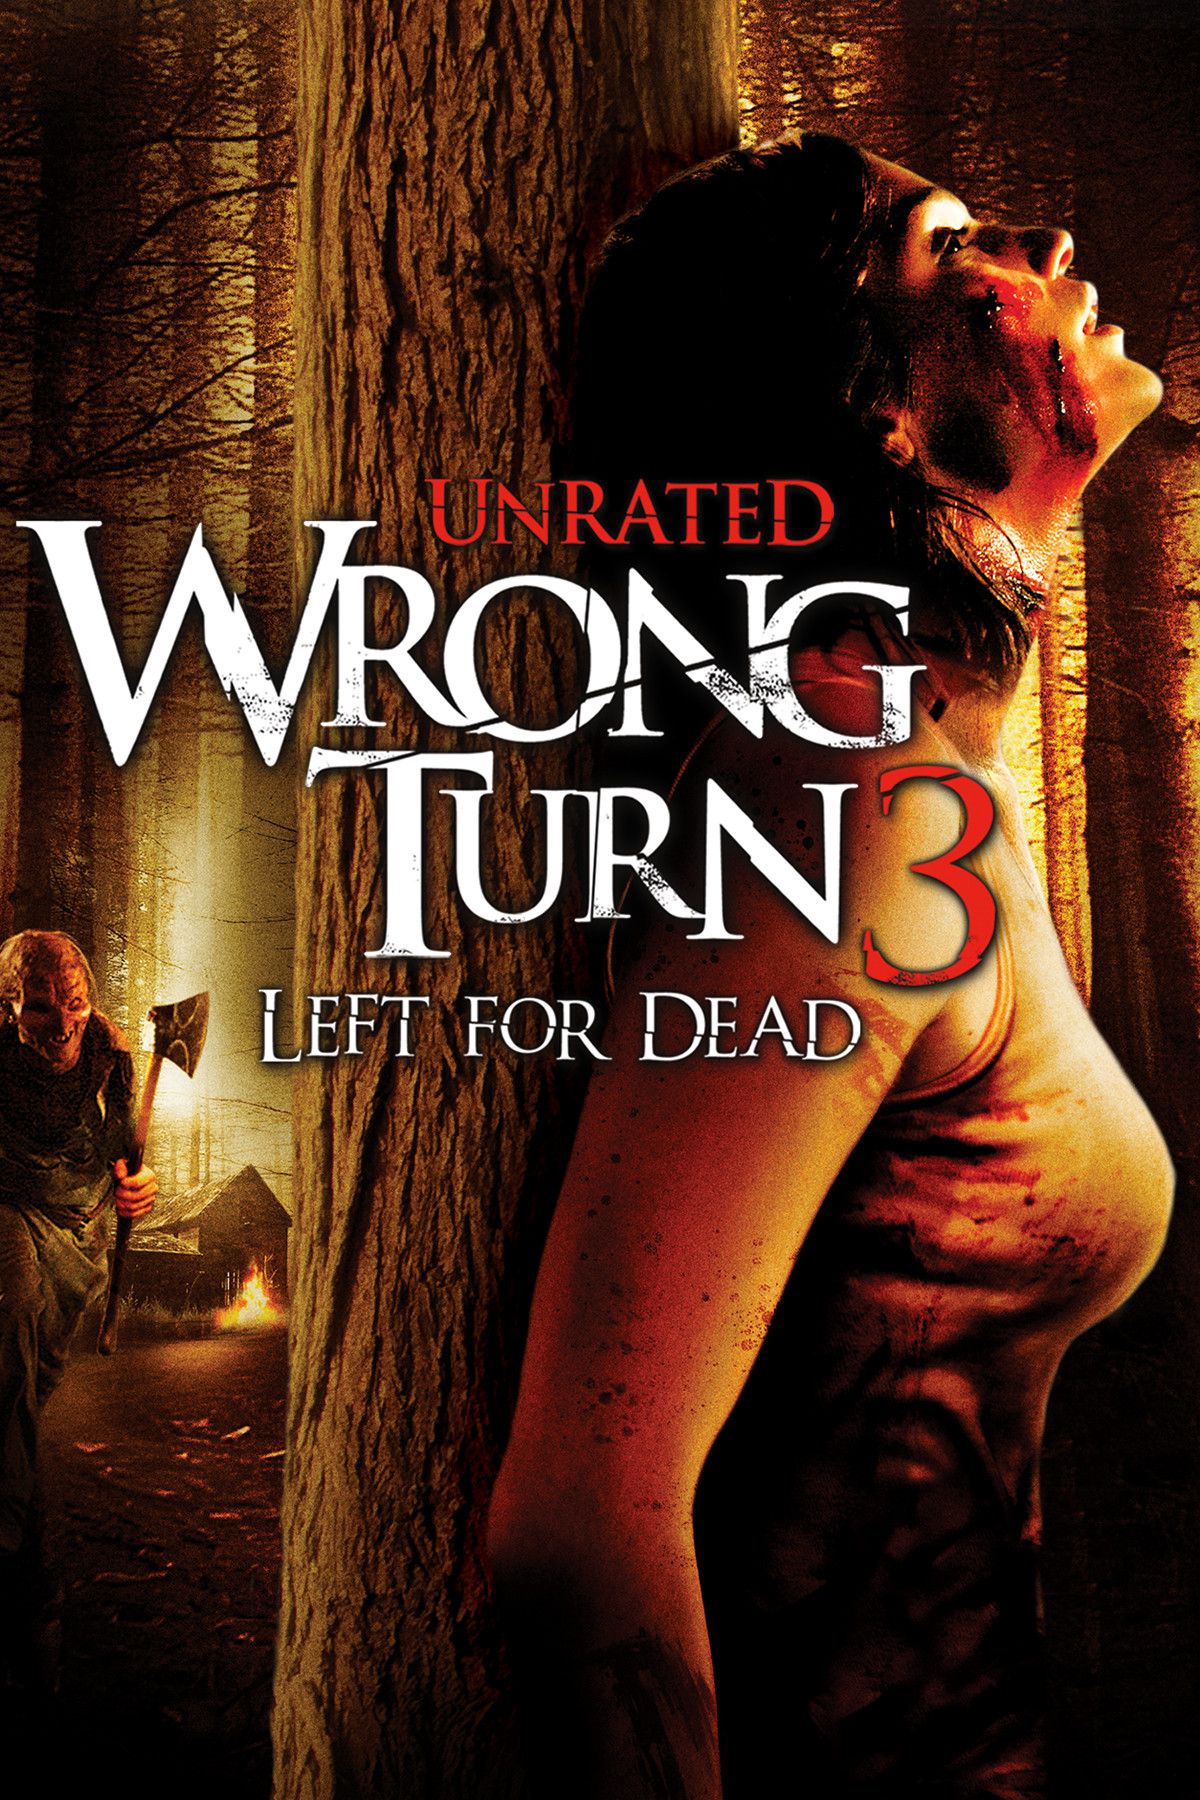 Wrong turn 3 full movie in hindi download